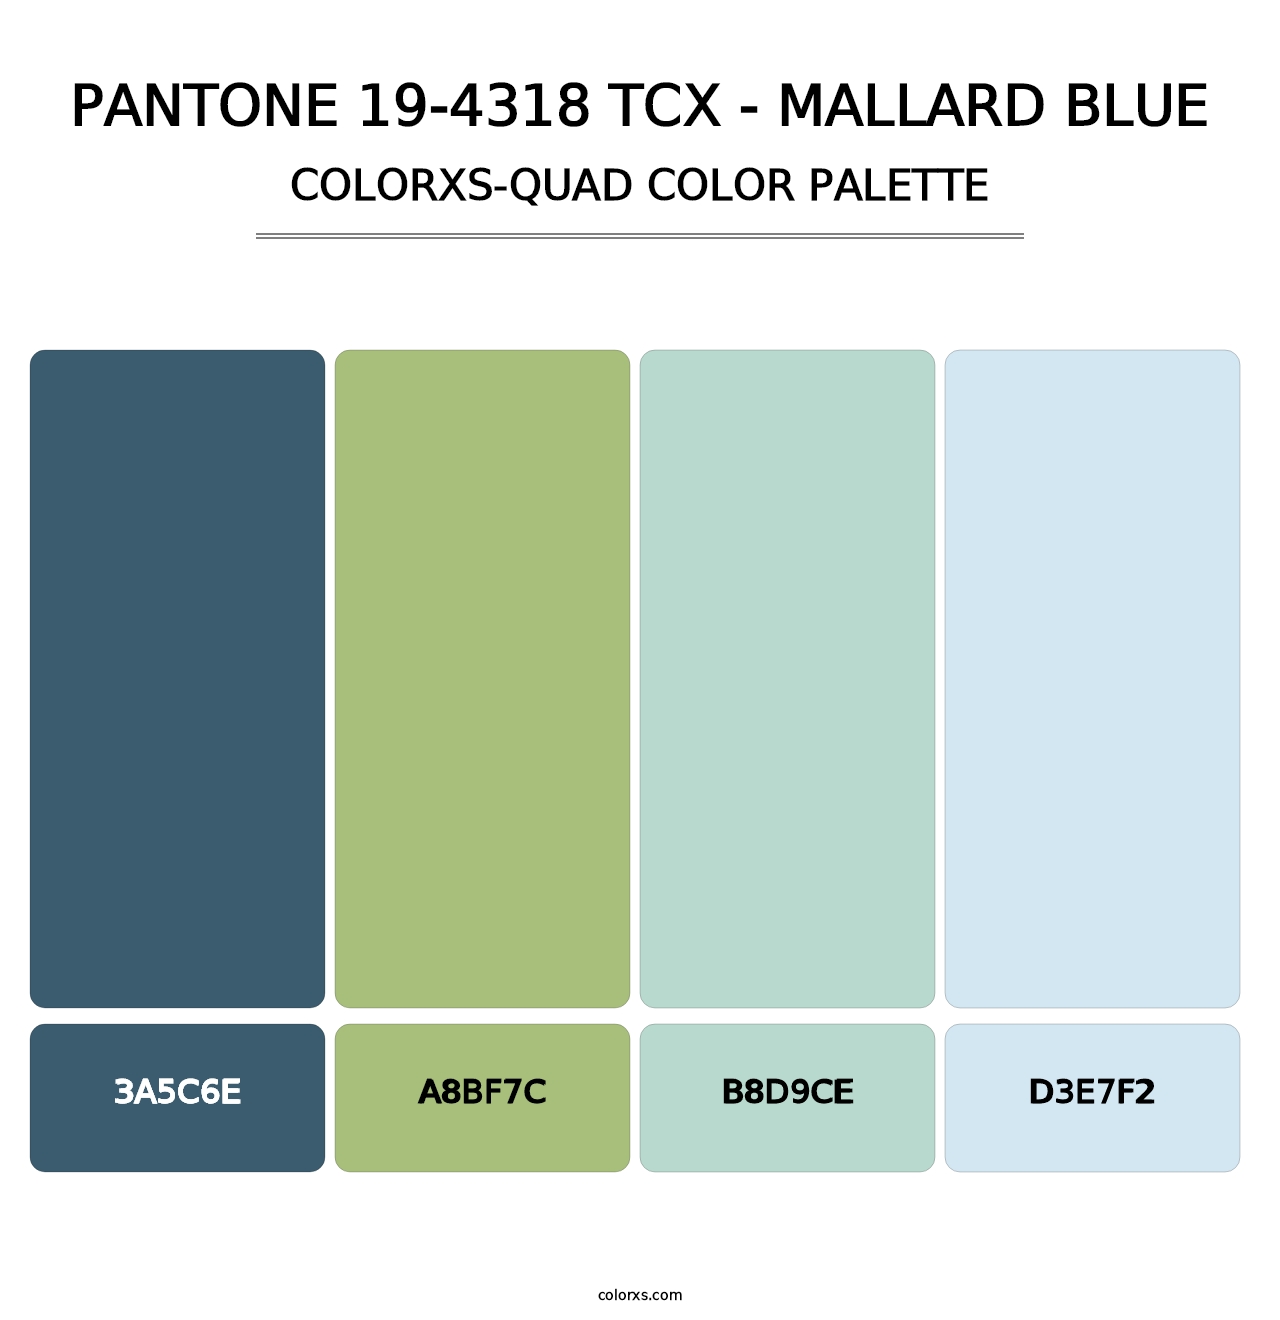 PANTONE 19-4318 TCX - Mallard Blue - Colorxs Quad Palette